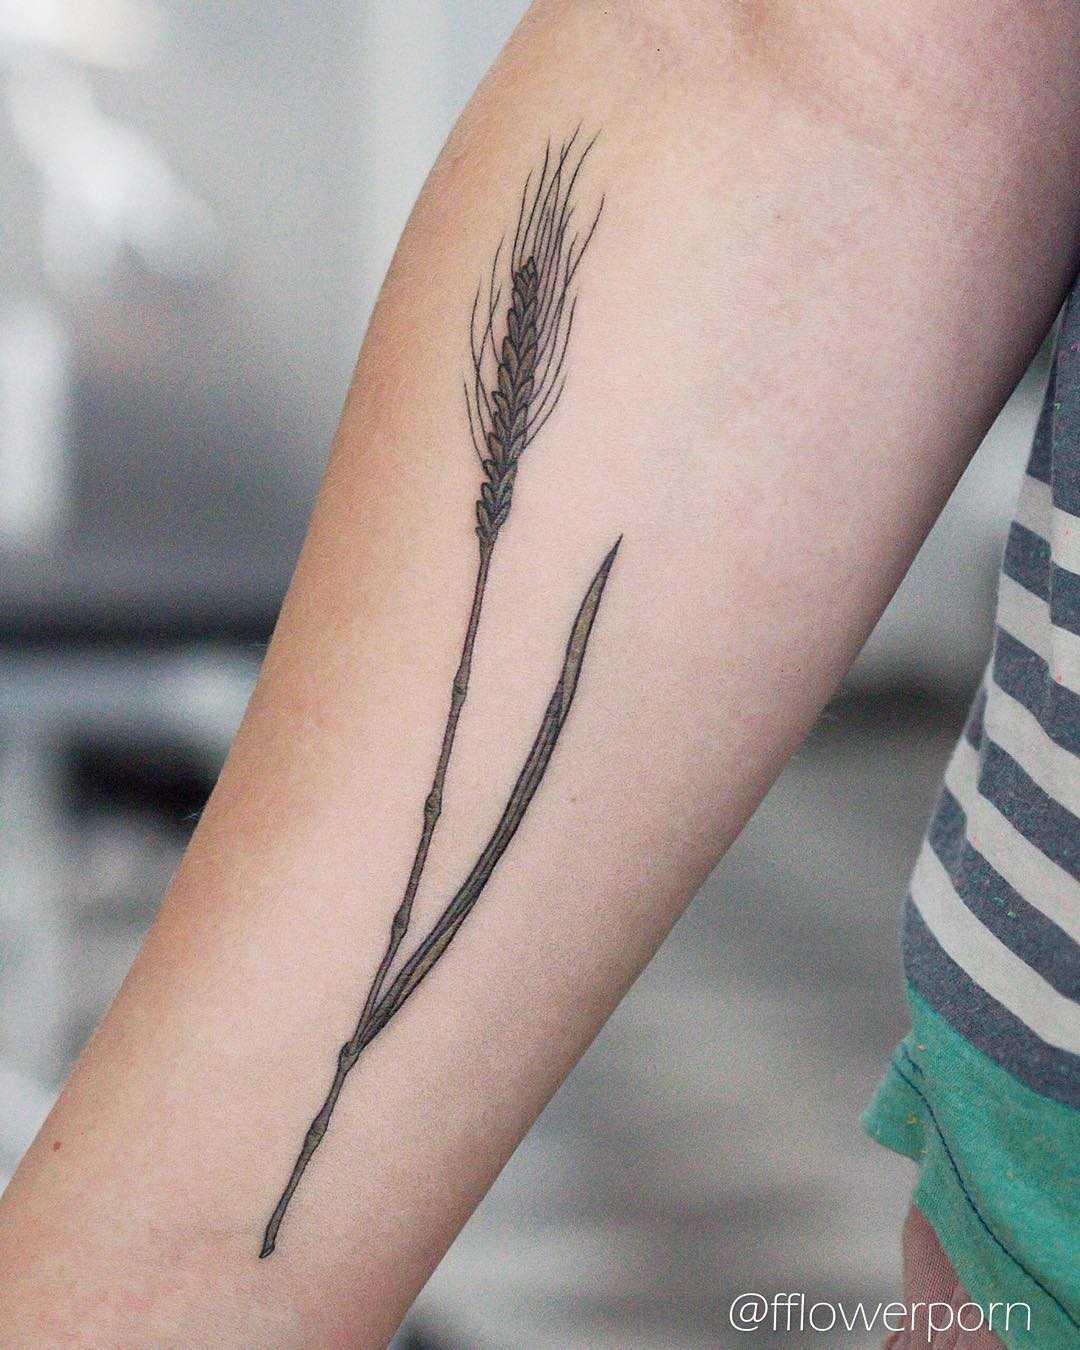 Single wheat straw tattoo